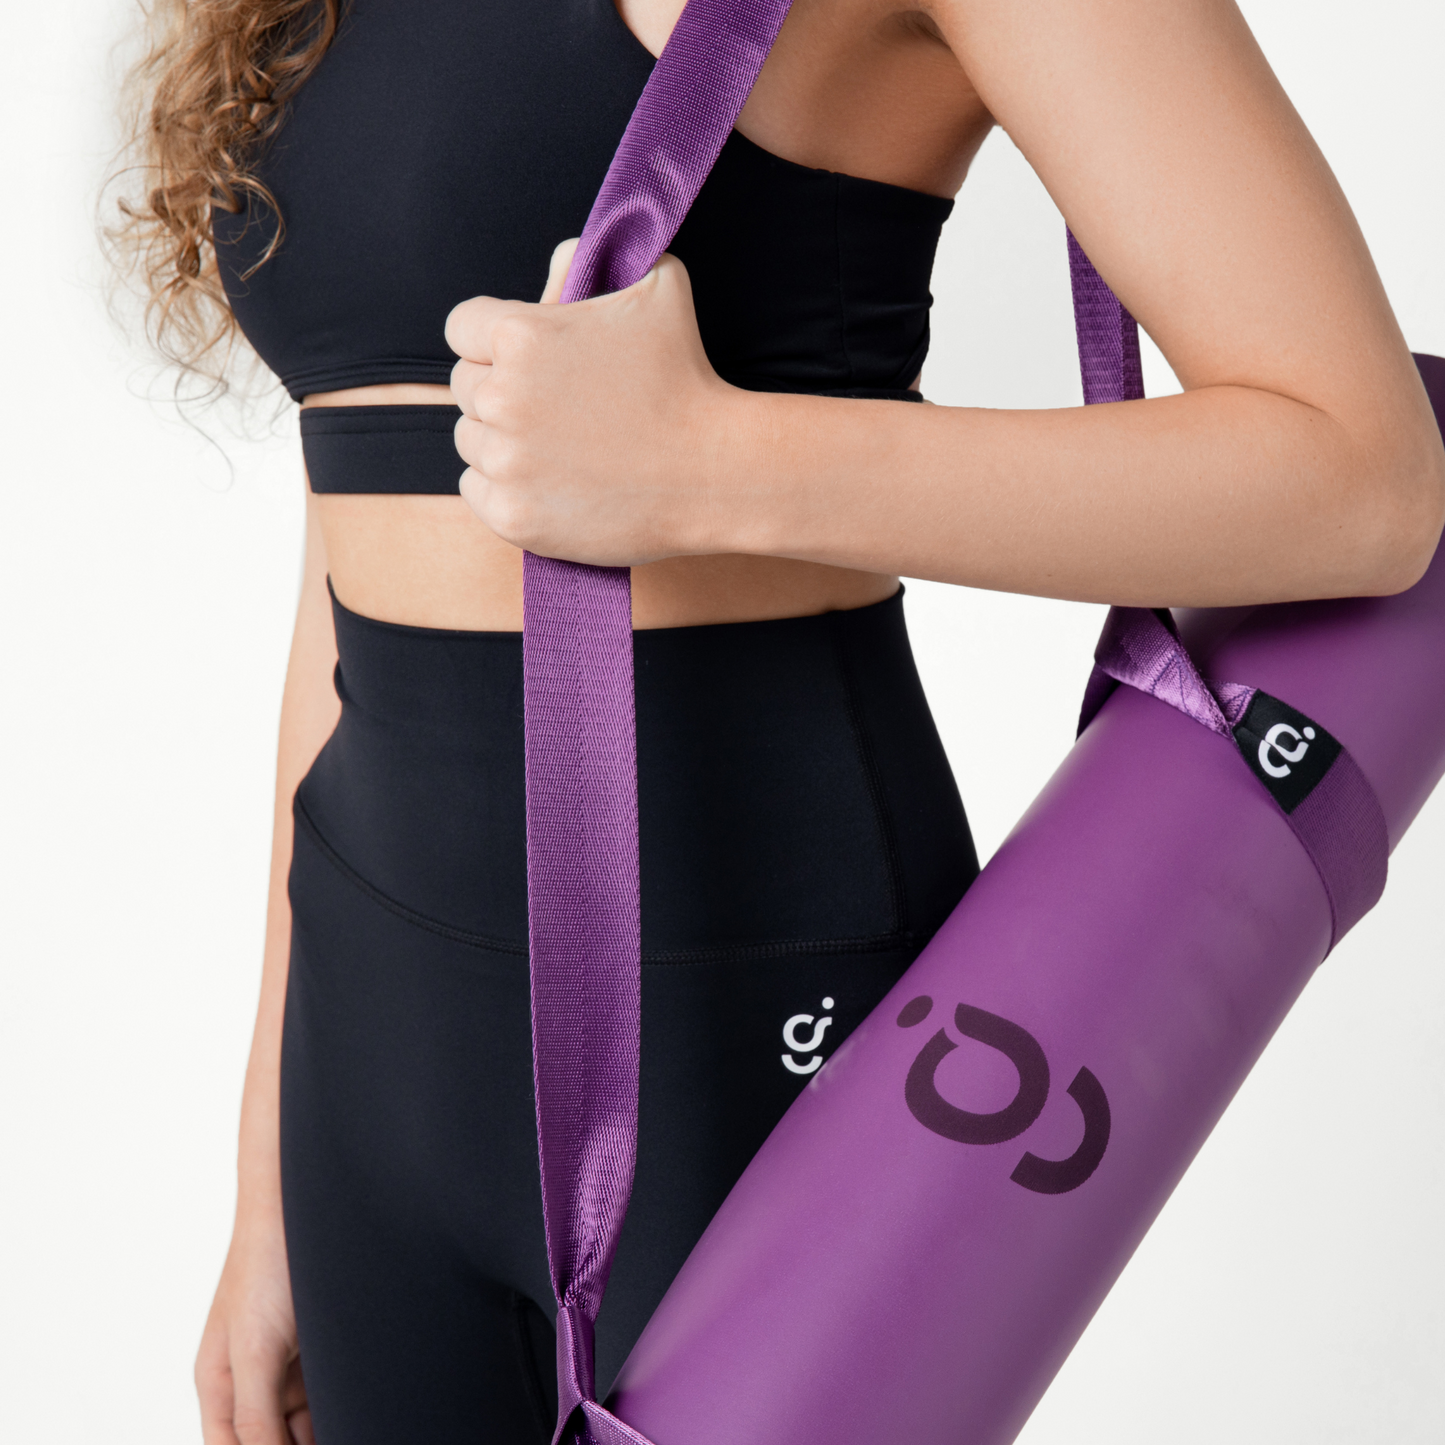 Yoga Mat and Strap: Natural Rubber, Non Slip, ECO-friendly